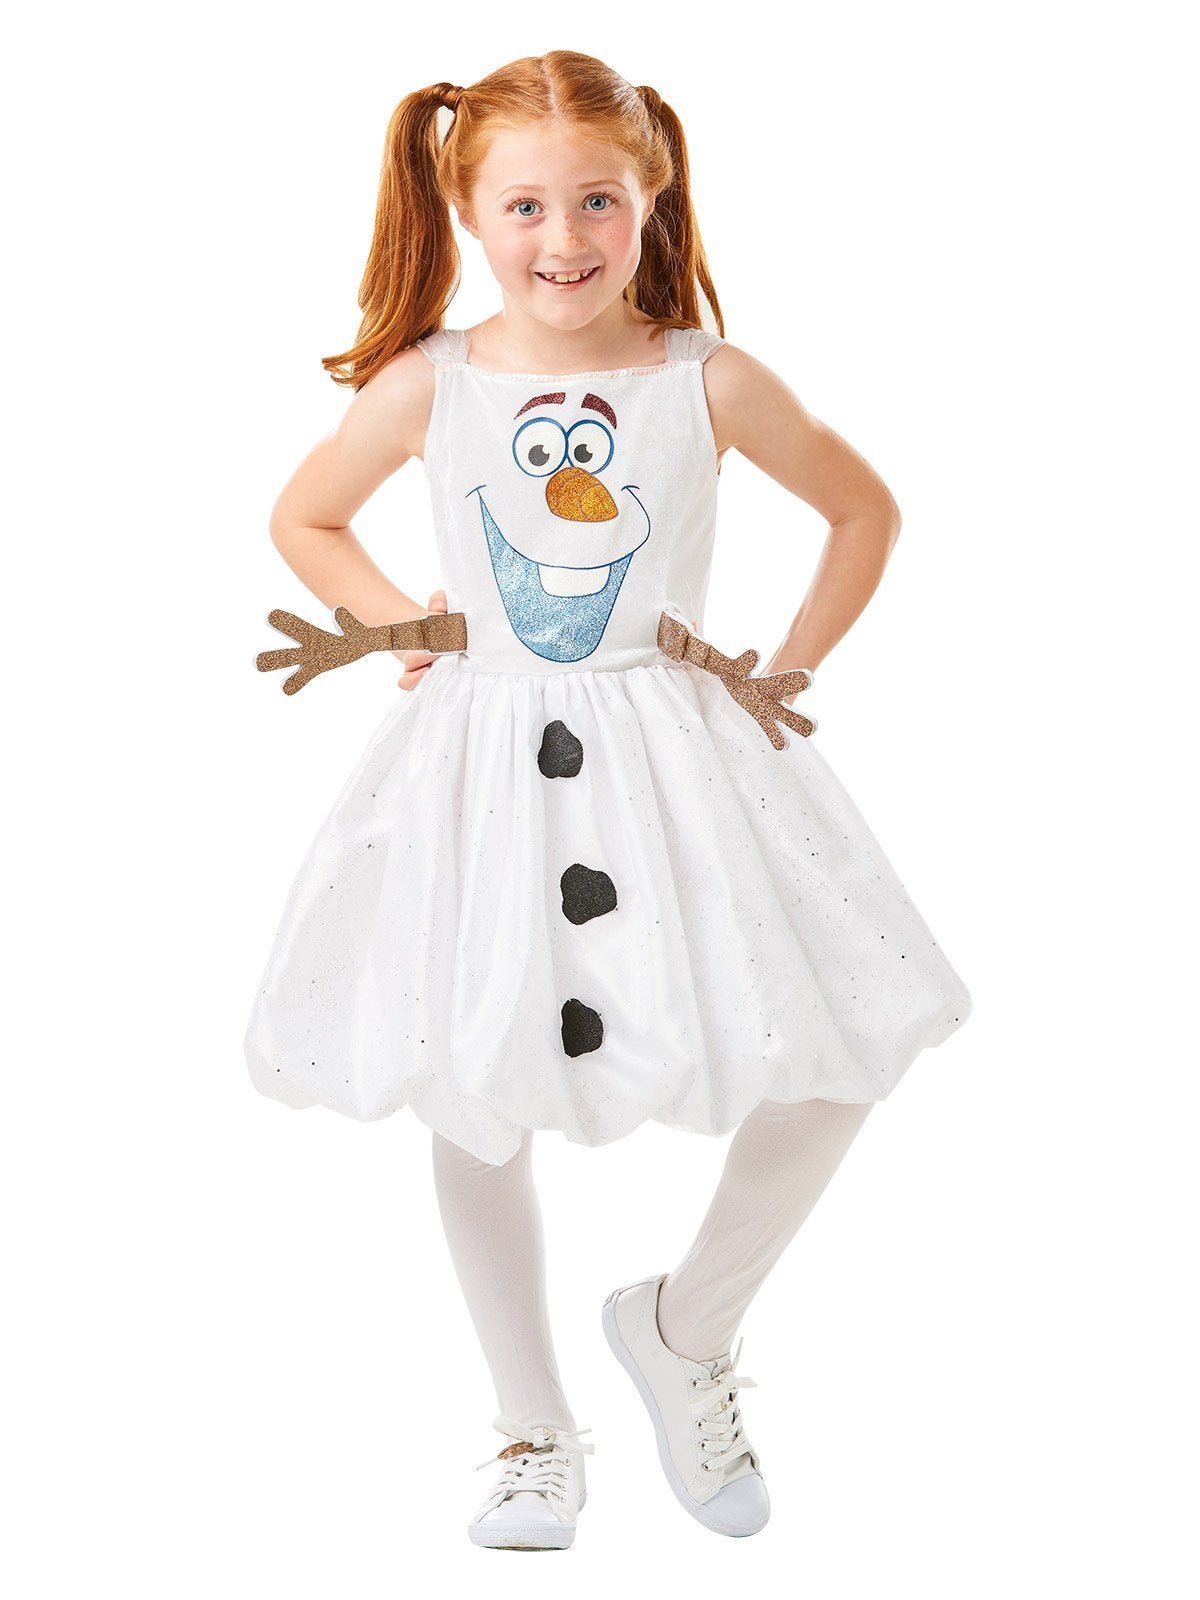 Olaf Tutu Dress for Kids - Disney Frozen 2